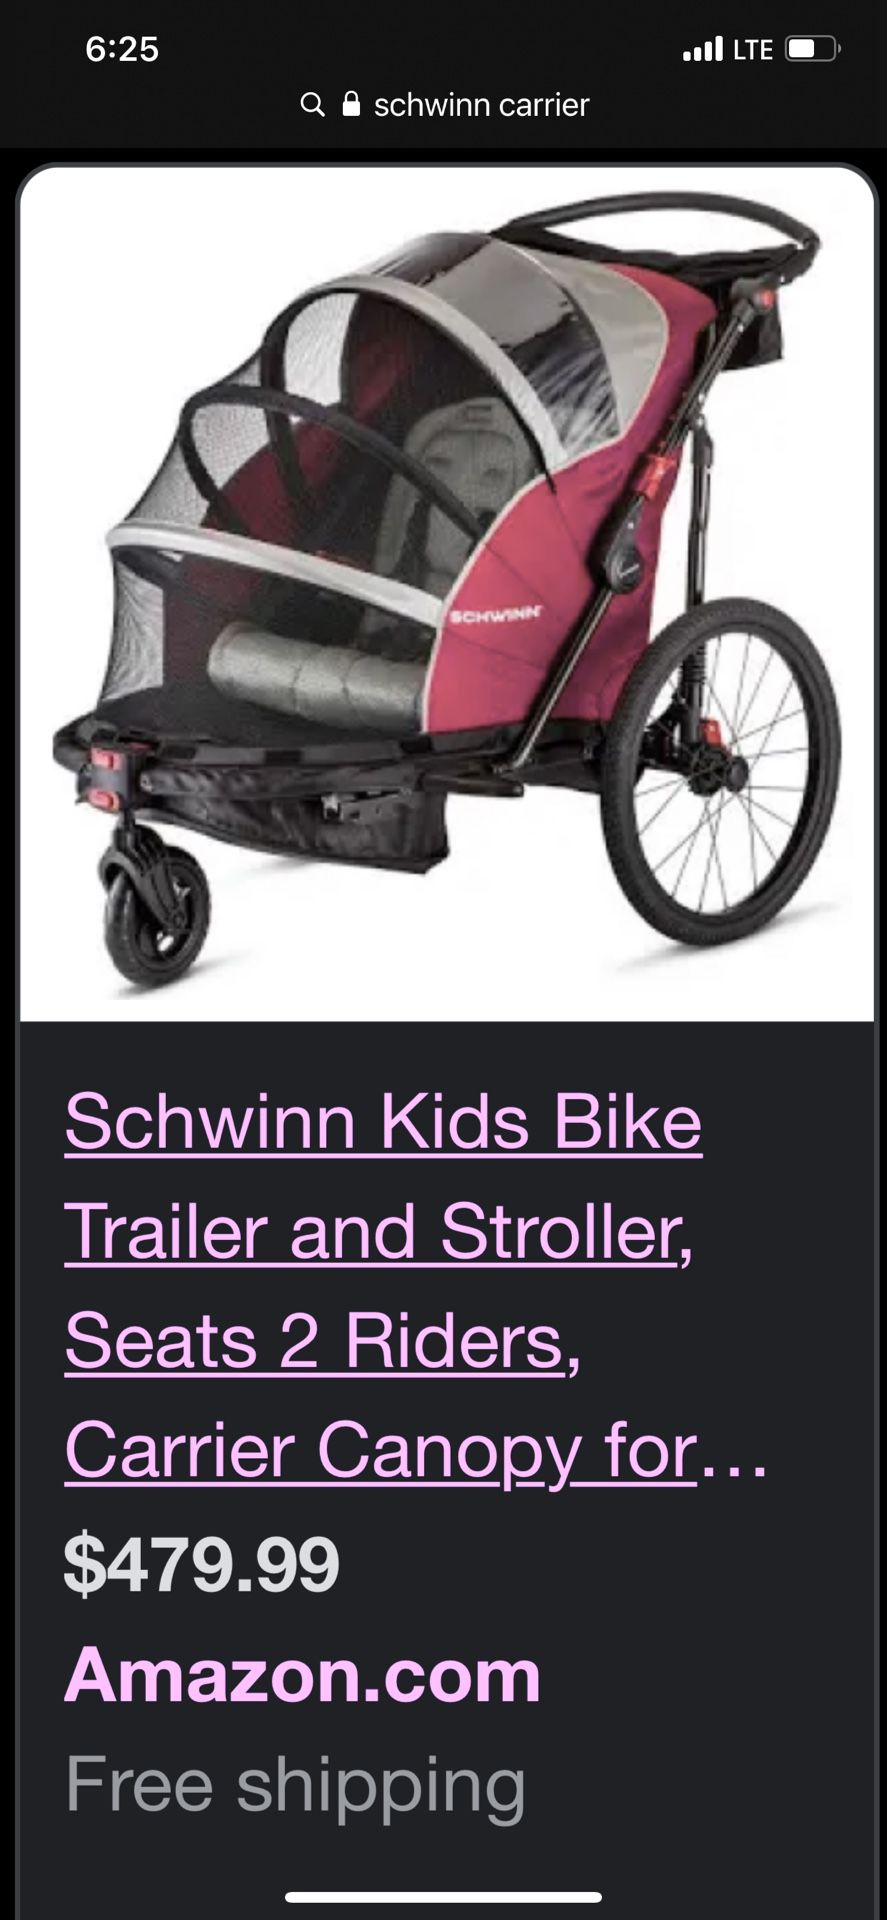 Schwinn Bike Trailer and Stroller